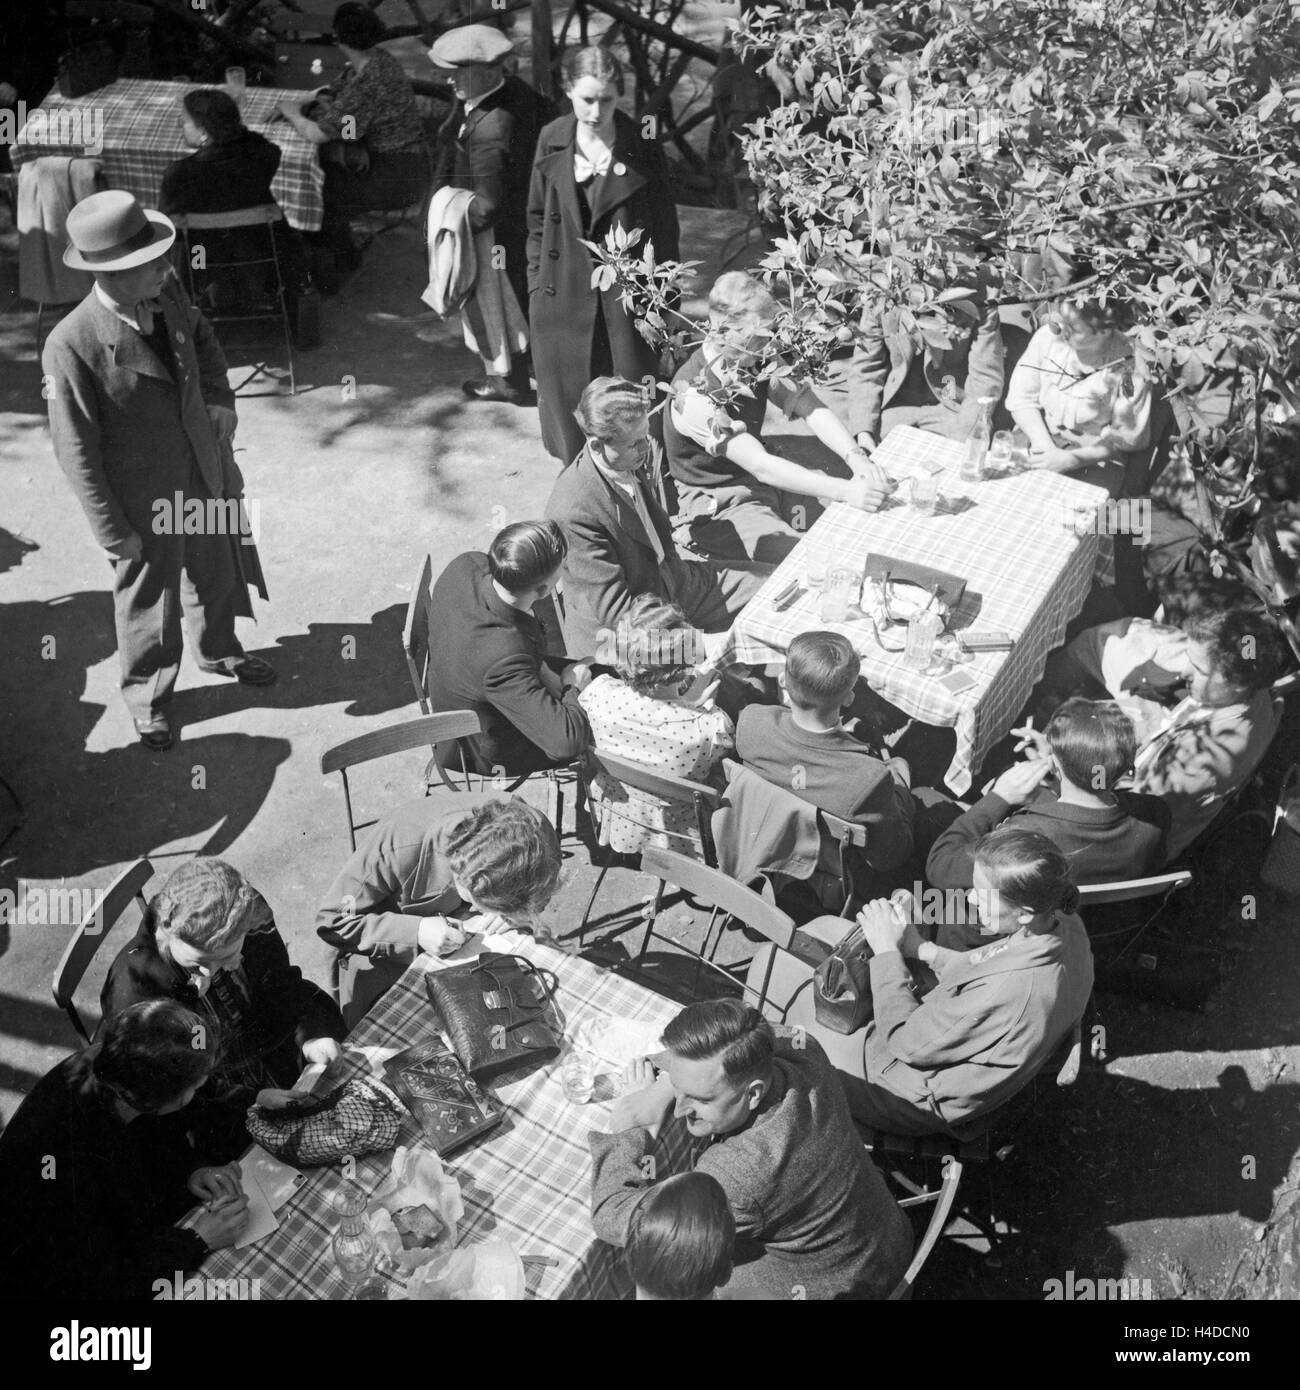 Menschen sitzen in einem Gartenrestaurant (ristorante nel giardino), Deutschland 1930er Jahre. La gente seduta in un ristorante con giardino, Germania 1930s. Foto Stock